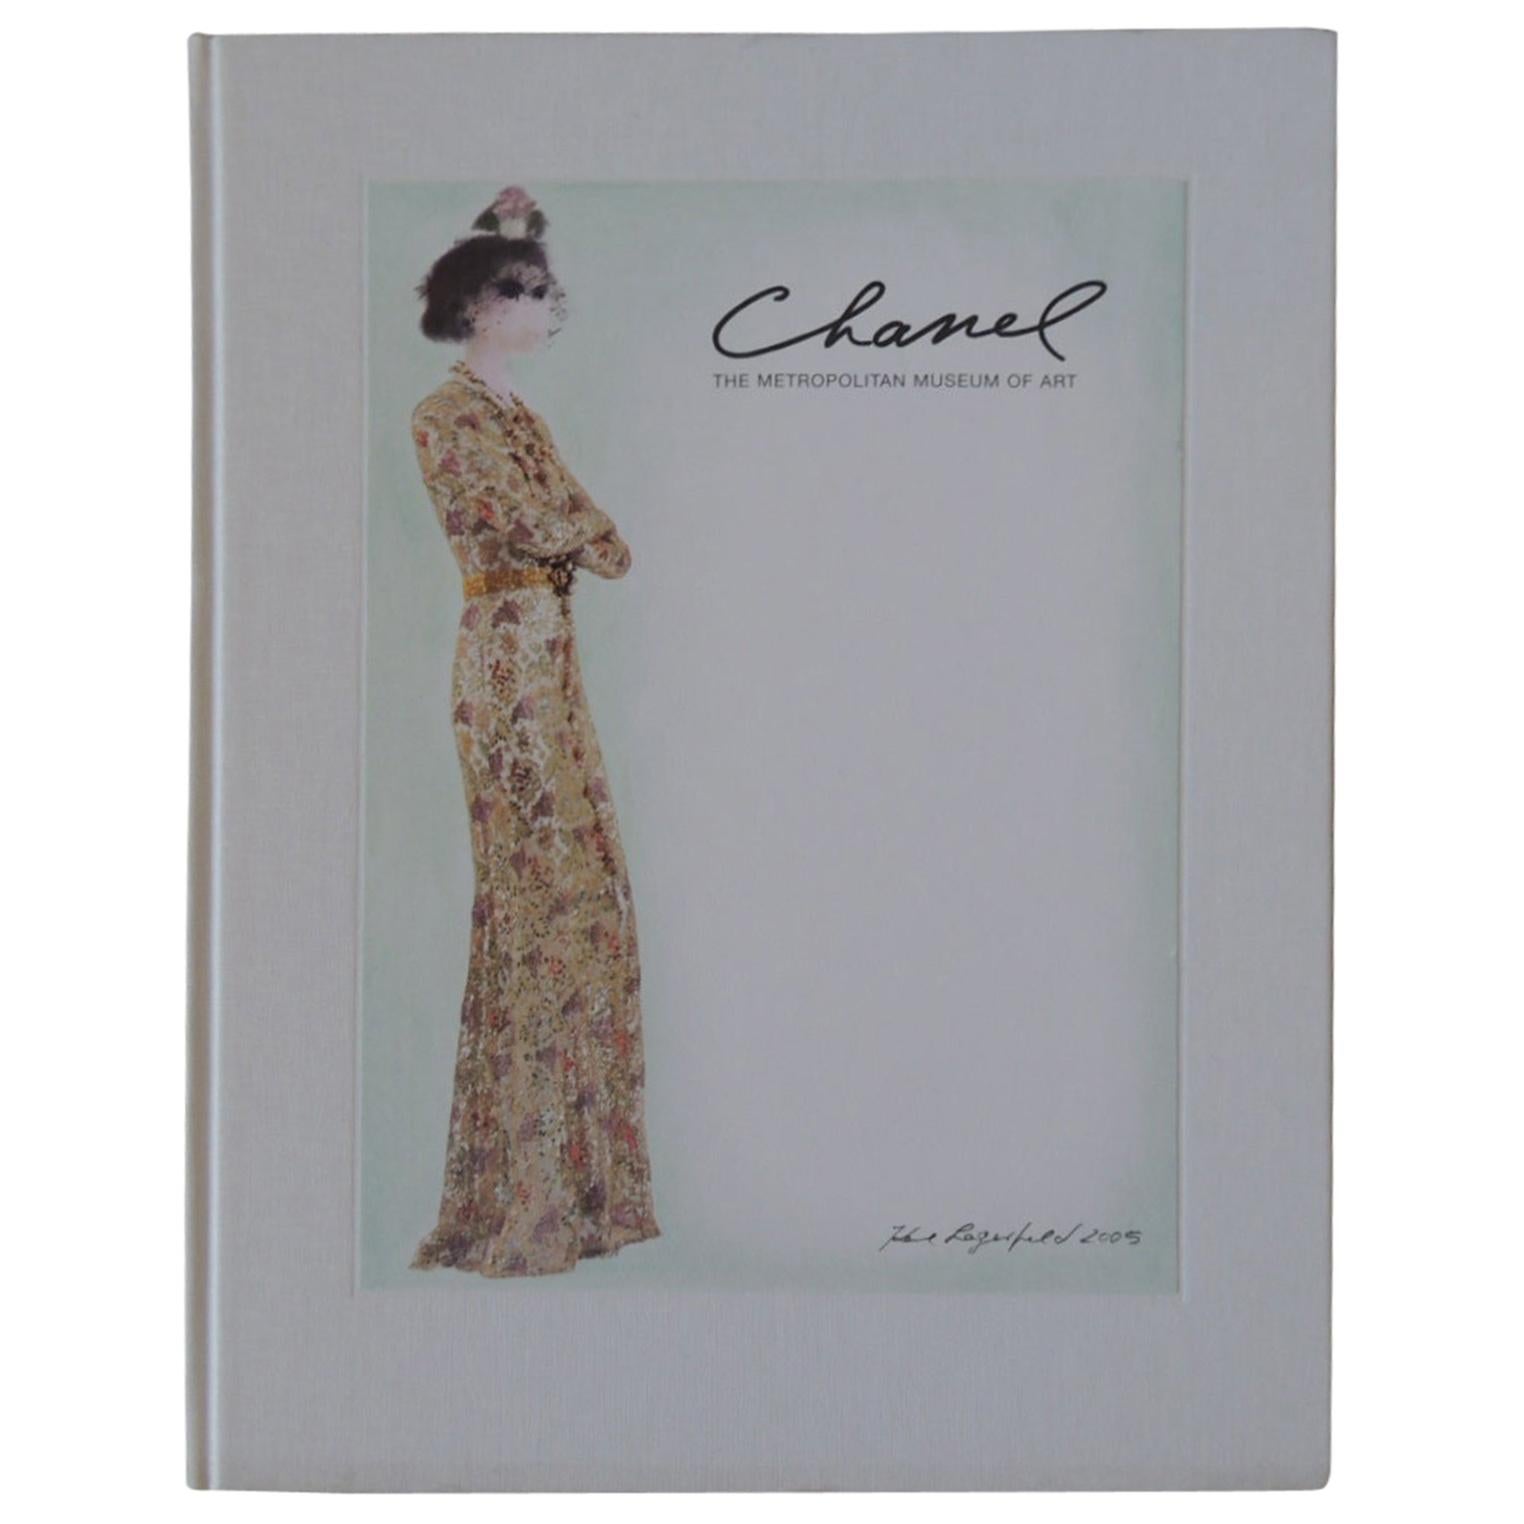 Chanel 'Metropolitan Museum of Art Publications' Catalog